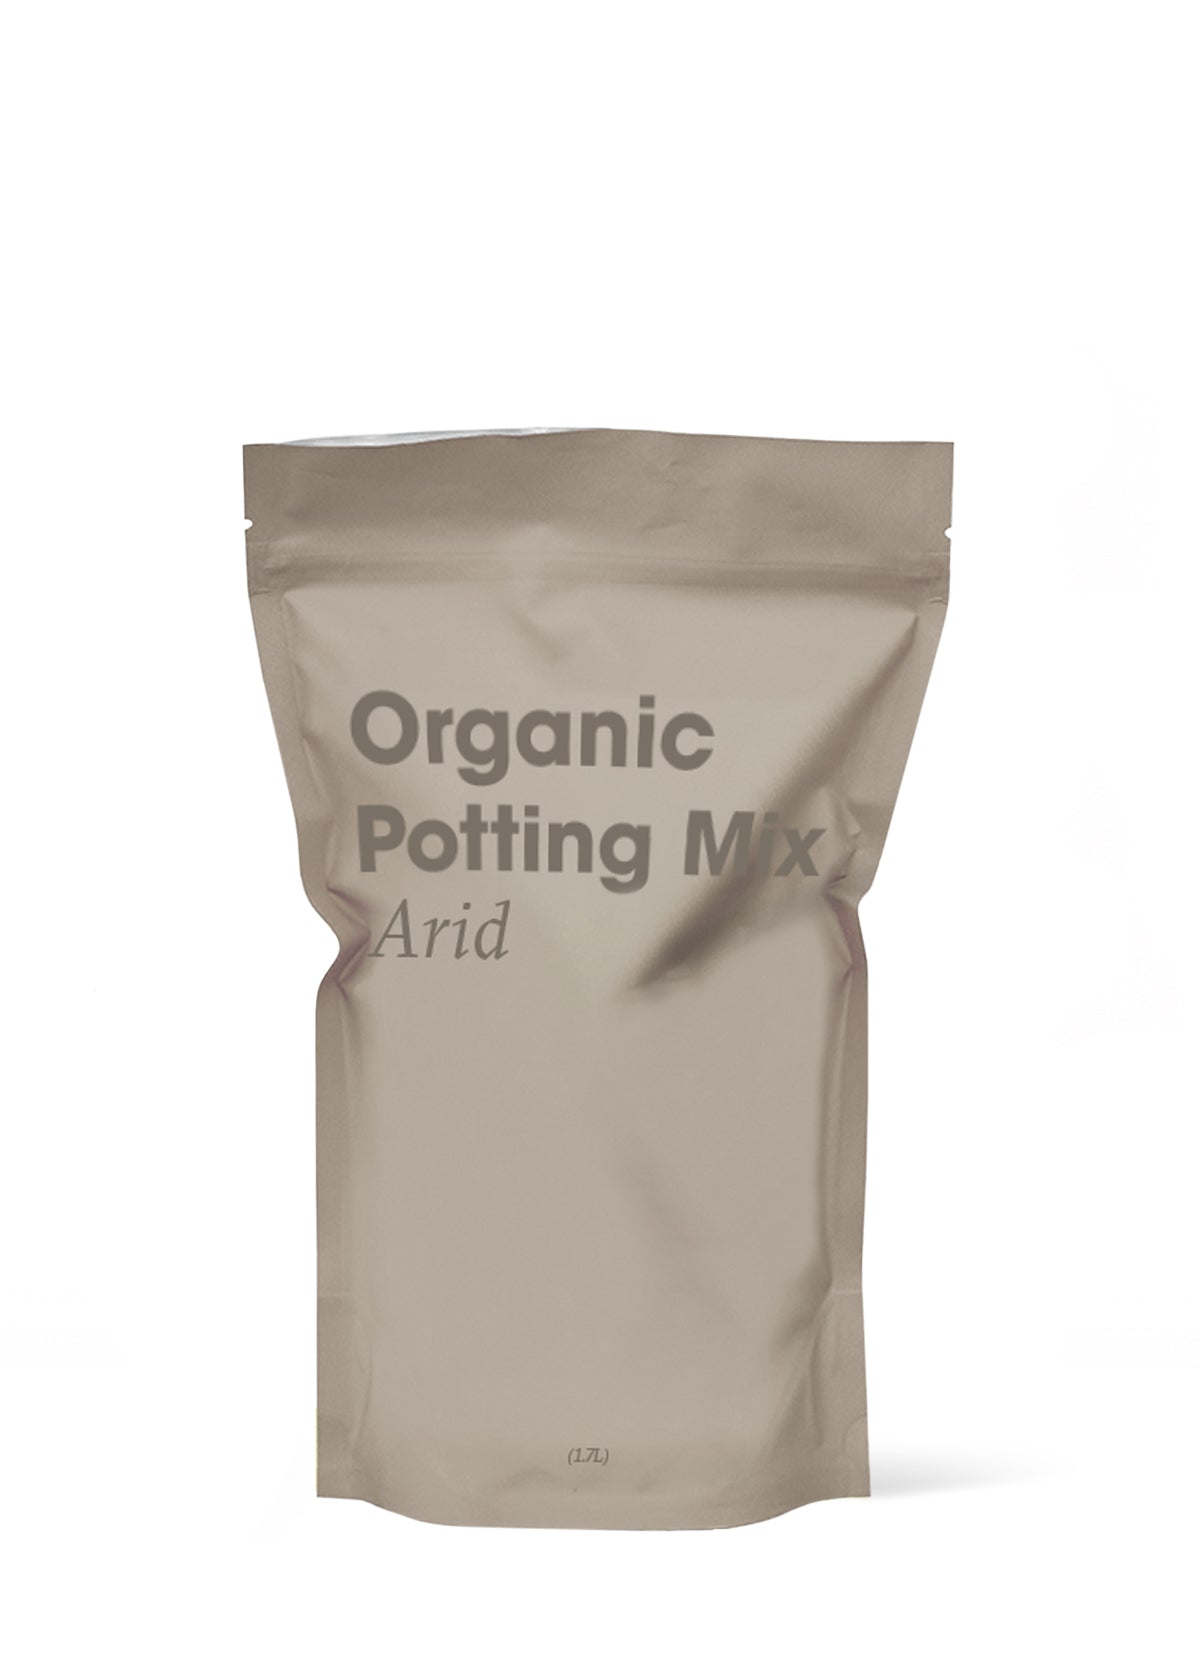 Potting Mix for Arid Plants